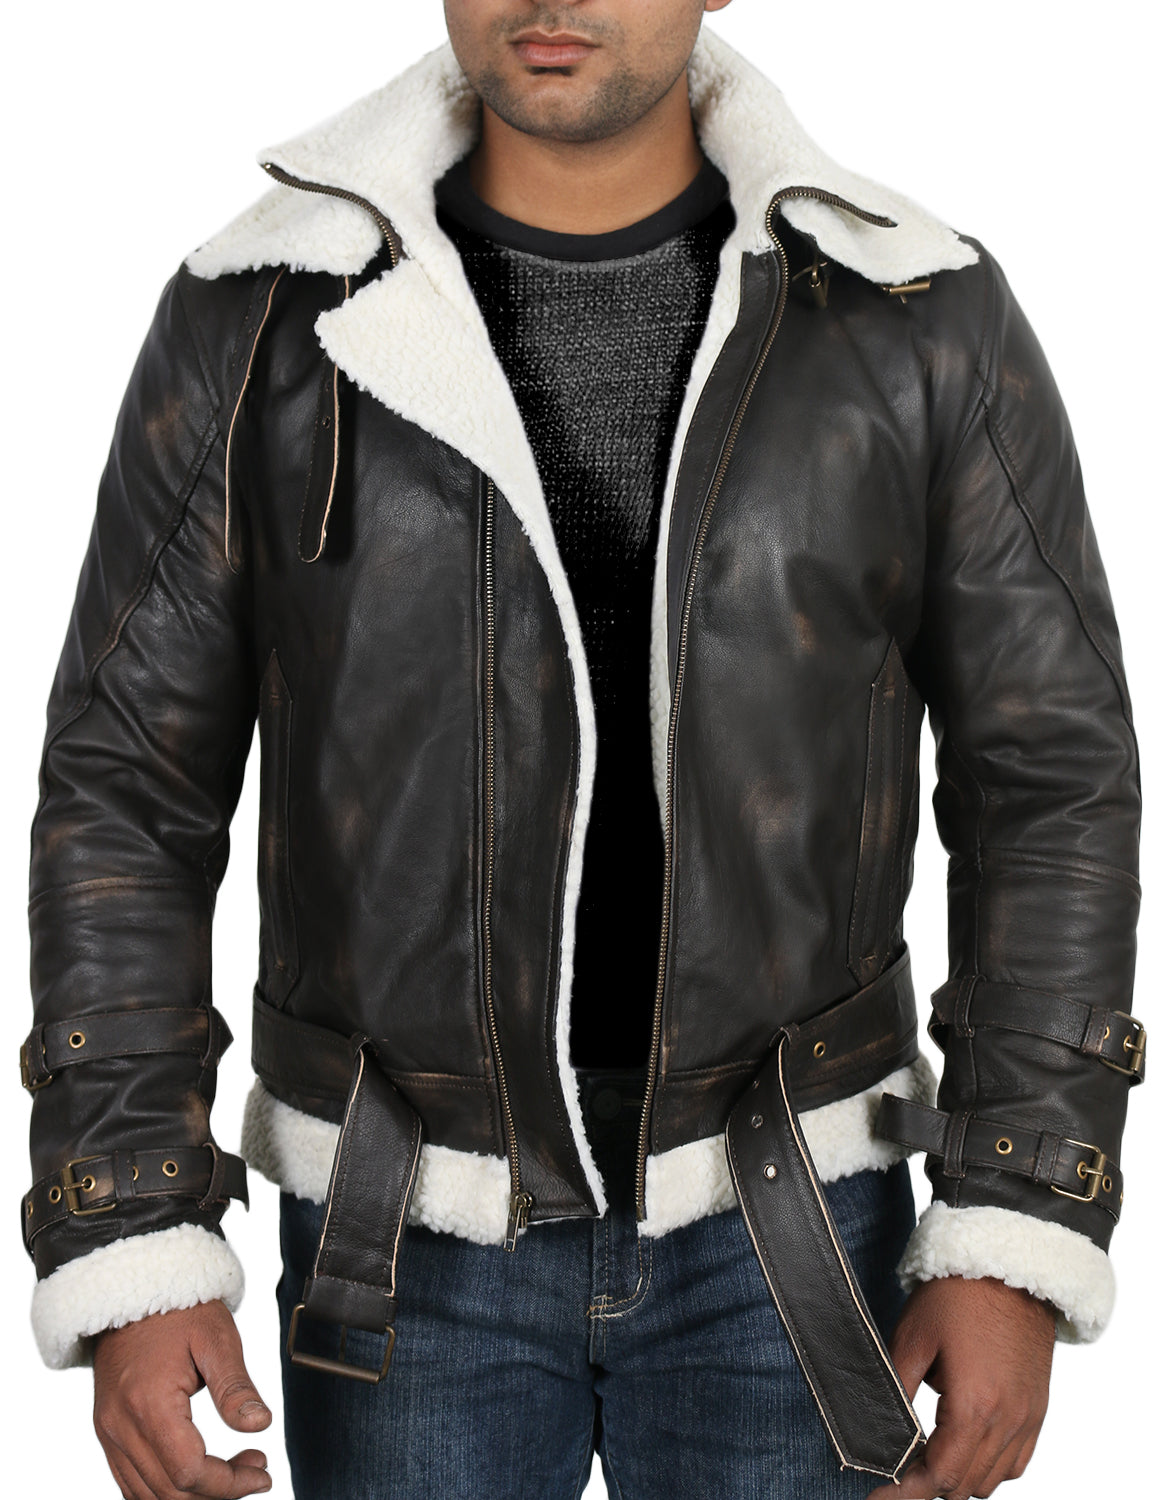 Leather Jackets Hub Mens Genuine Cow Ruboff Leather Jacket (Black-Rubboff, Aviator Jacket) - 1701069